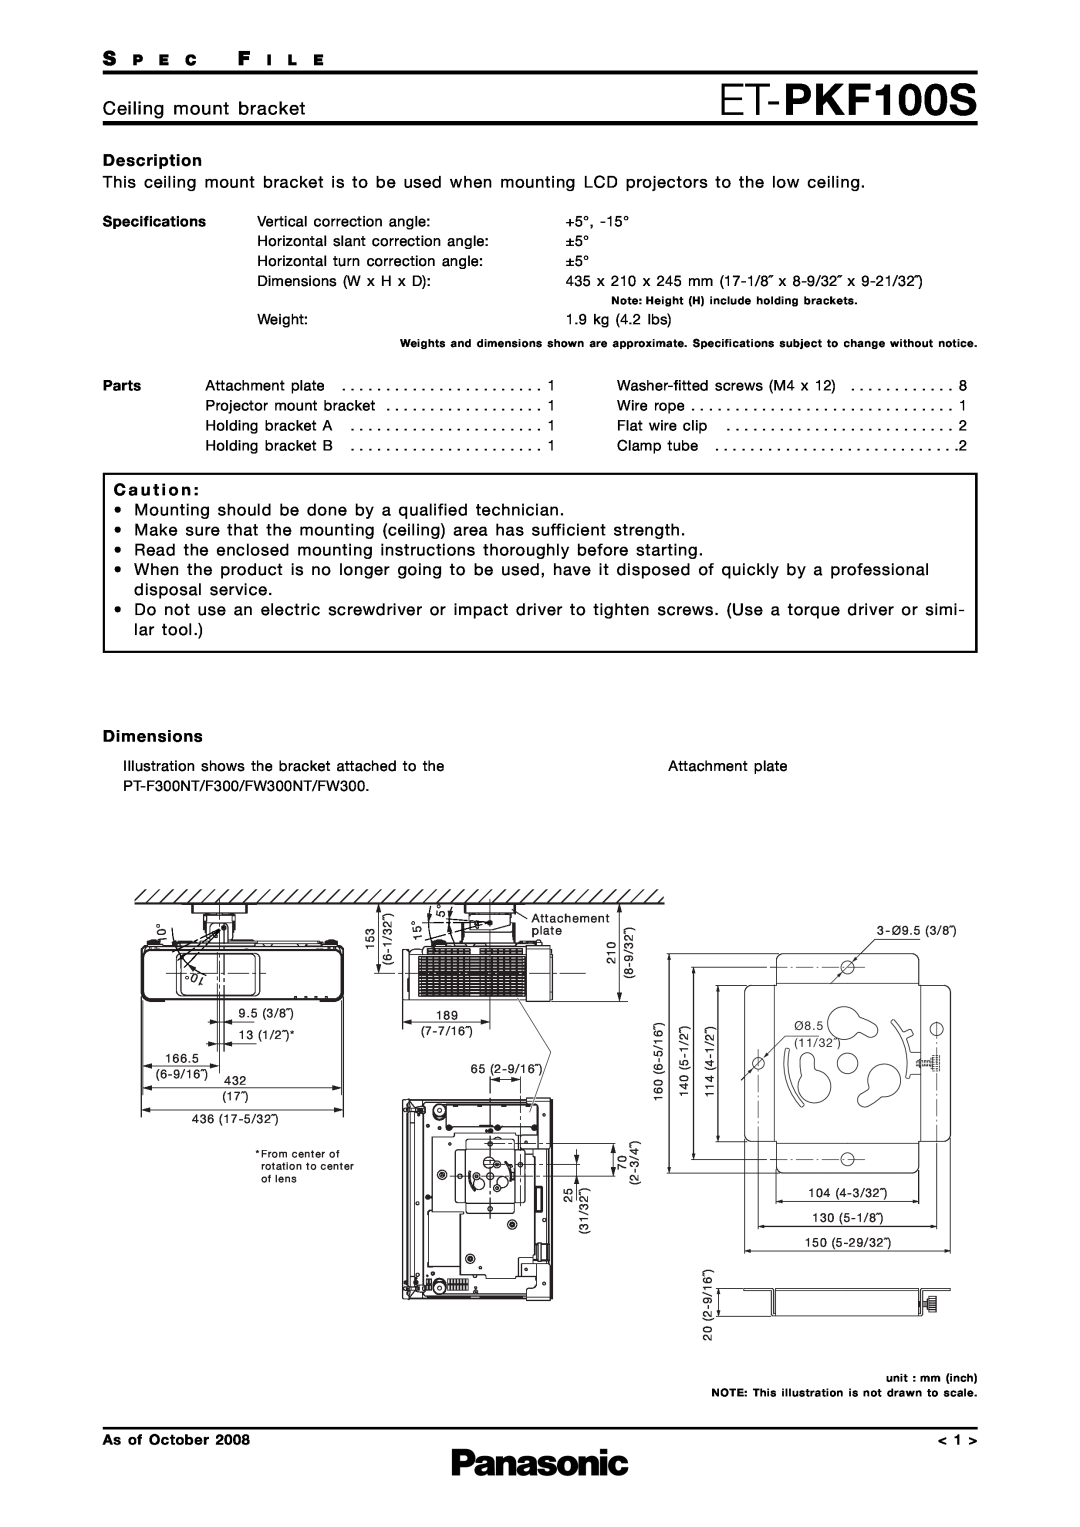 Panasonic ET-PKF100S dimensions Ceiling mount bracket, Description, C a u t i o n, Dimensions 